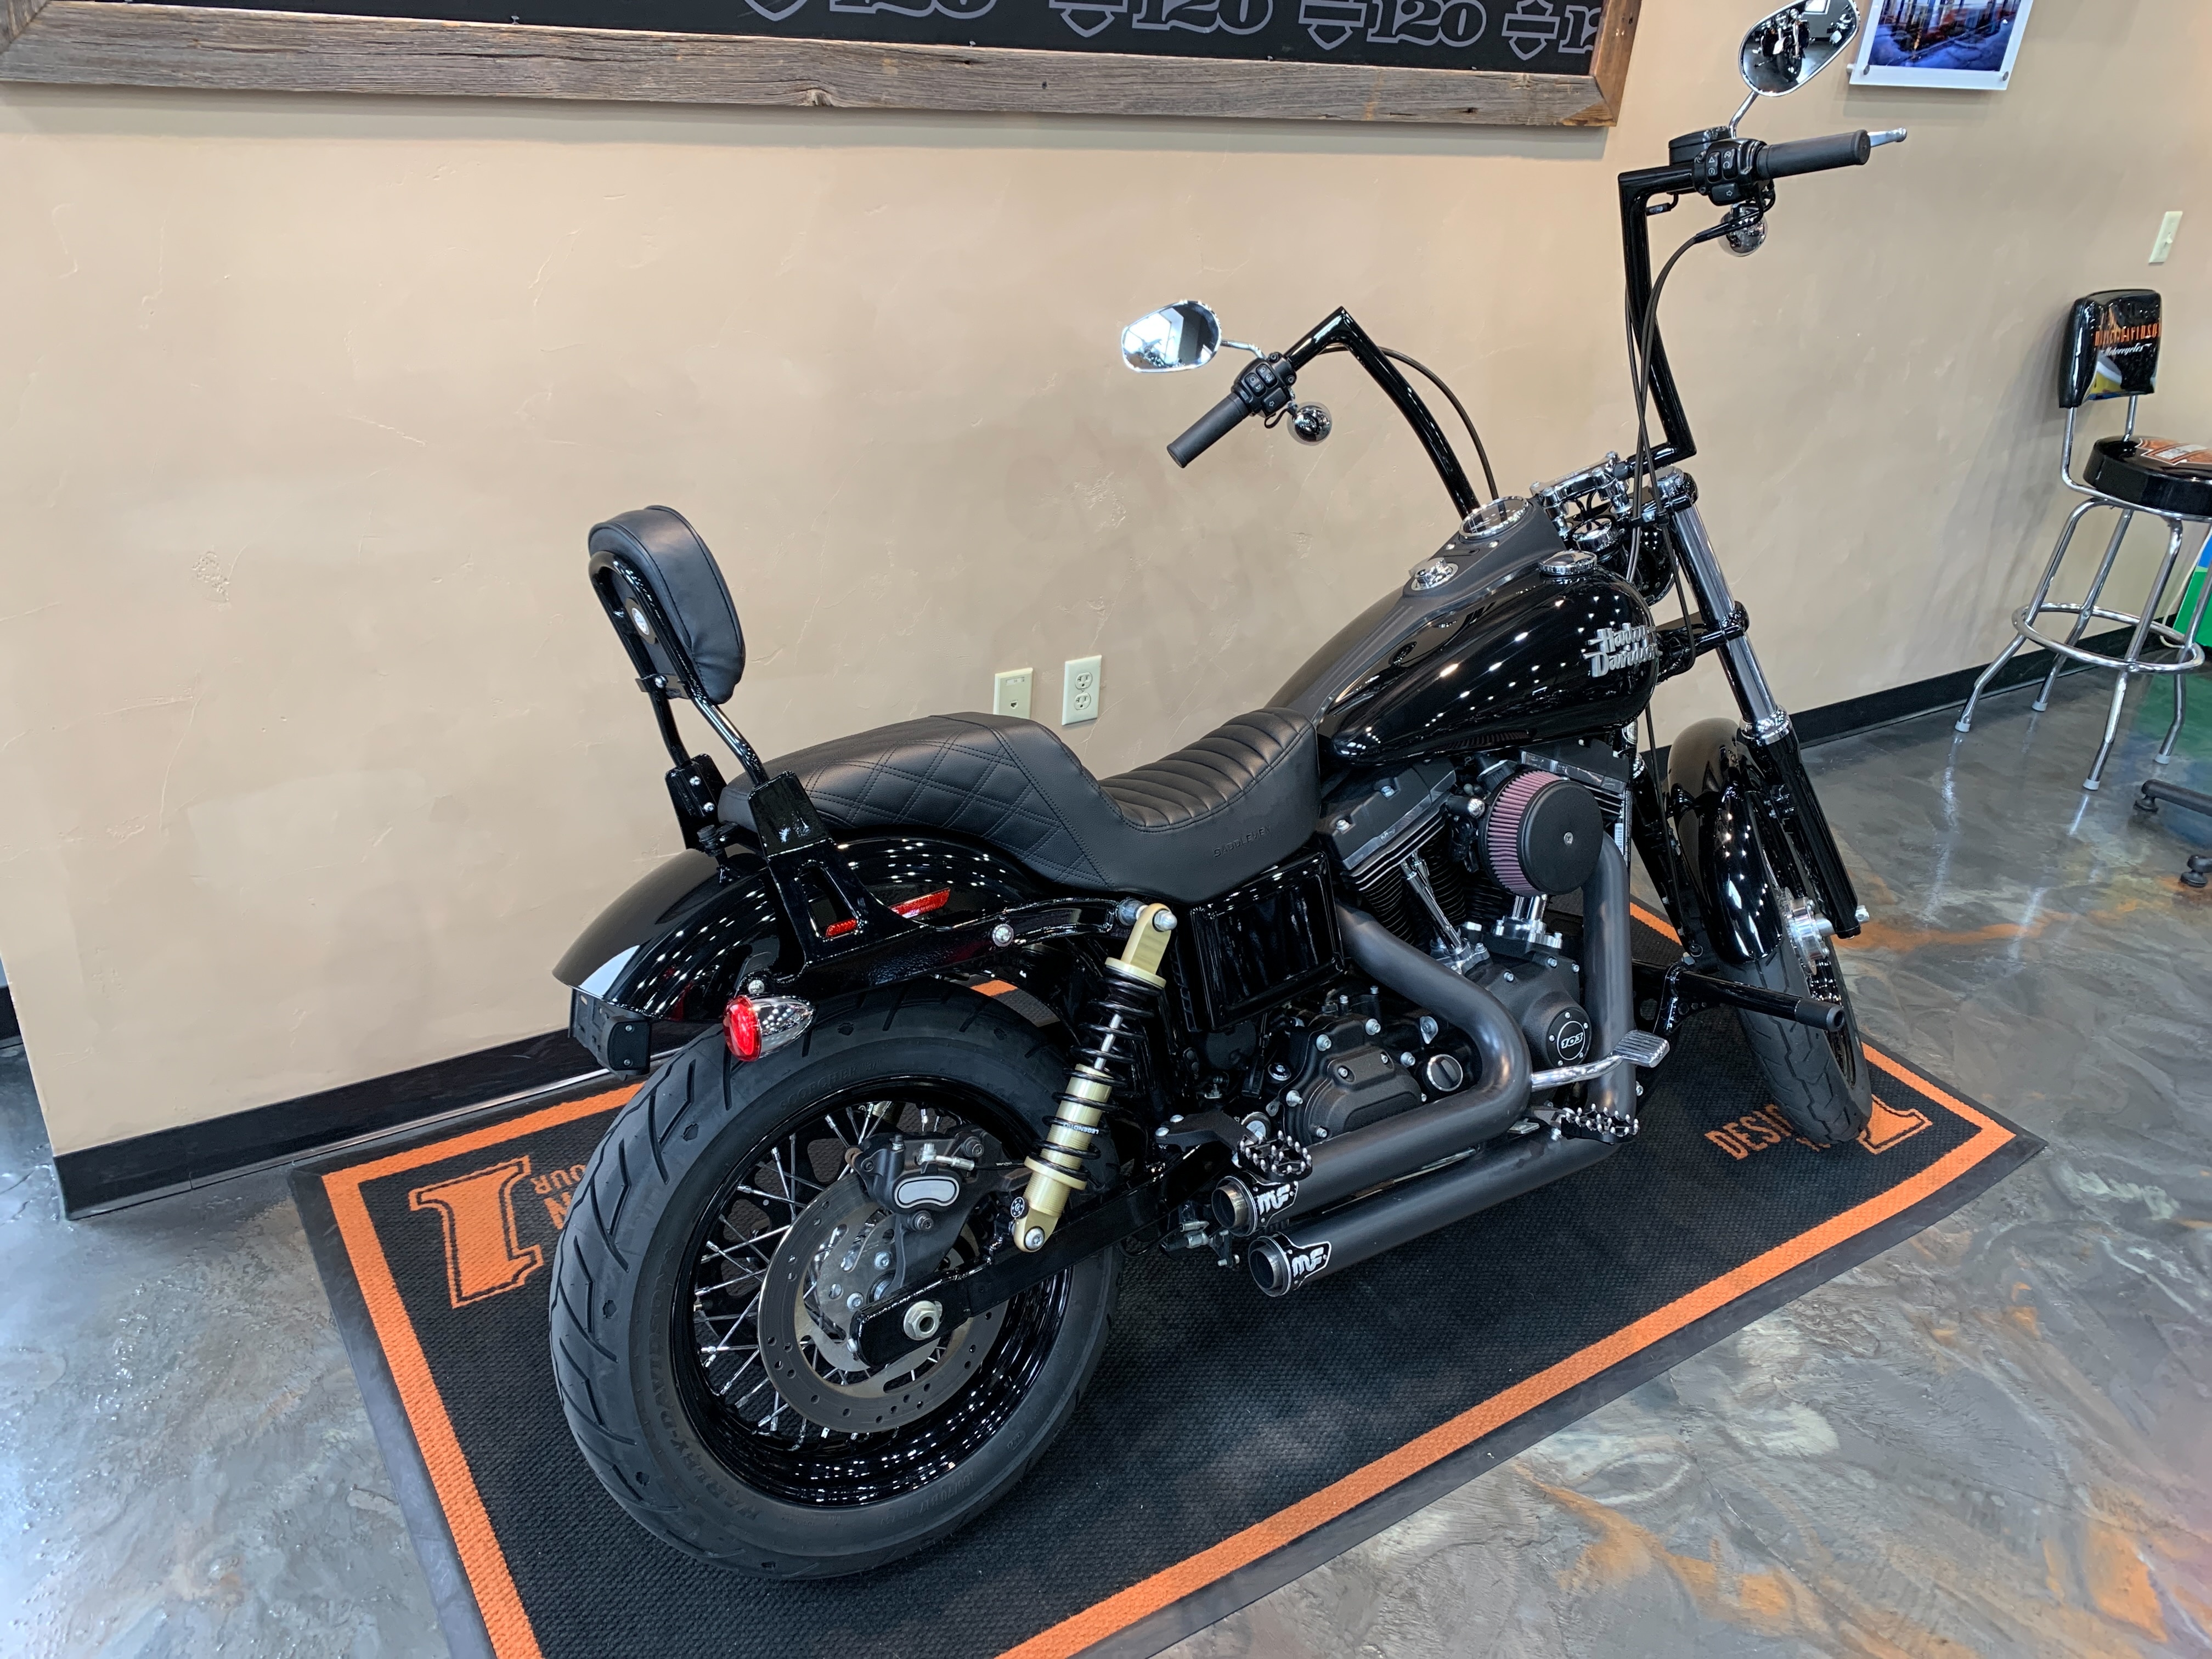 2017 Harley-Davidson Dyna Street Bob at Vandervest Harley-Davidson, Green Bay, WI 54303